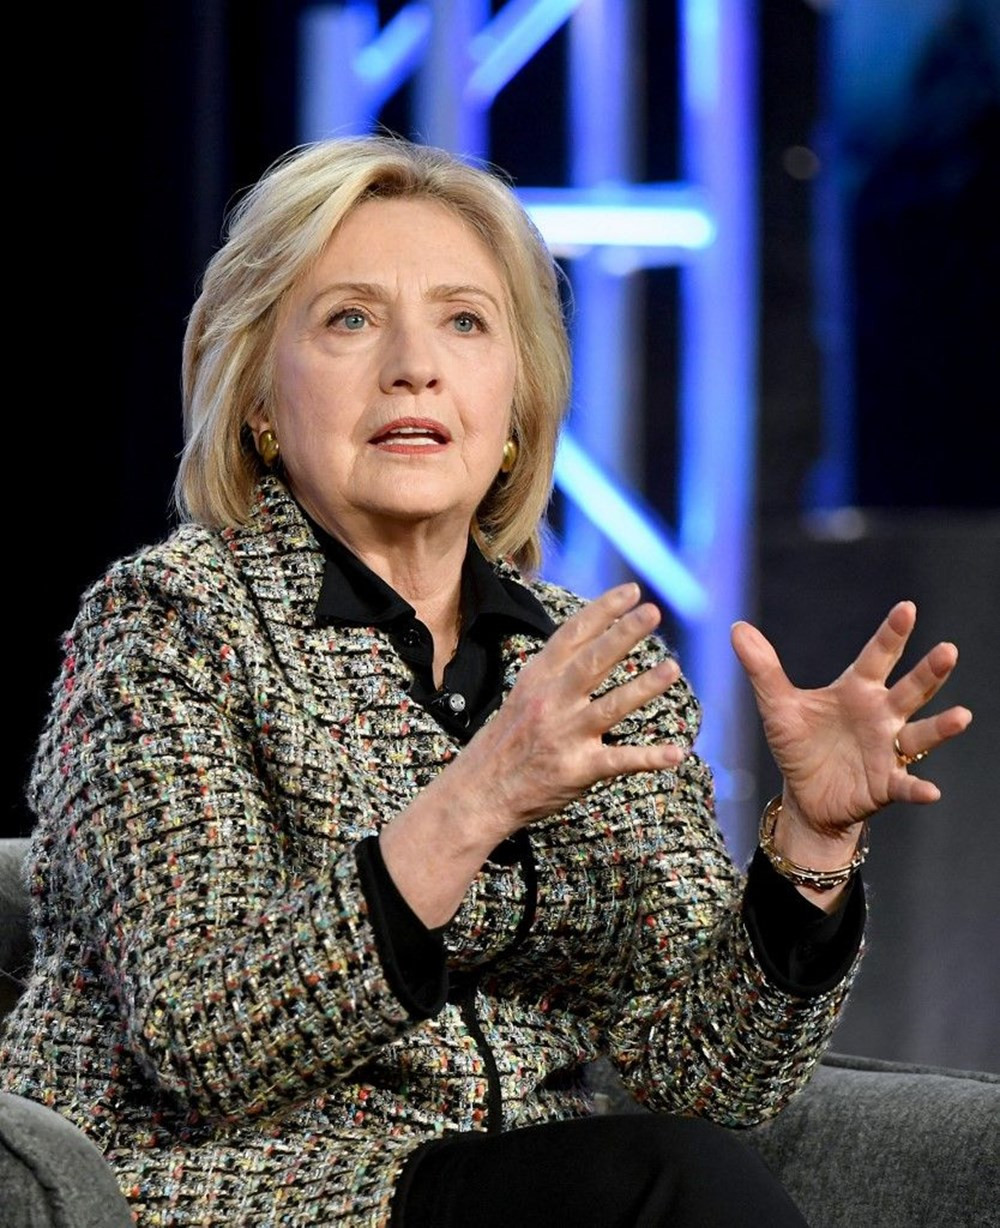  Hillary Clinton’dan ilk gerilimli siyasi roman: State of Terror